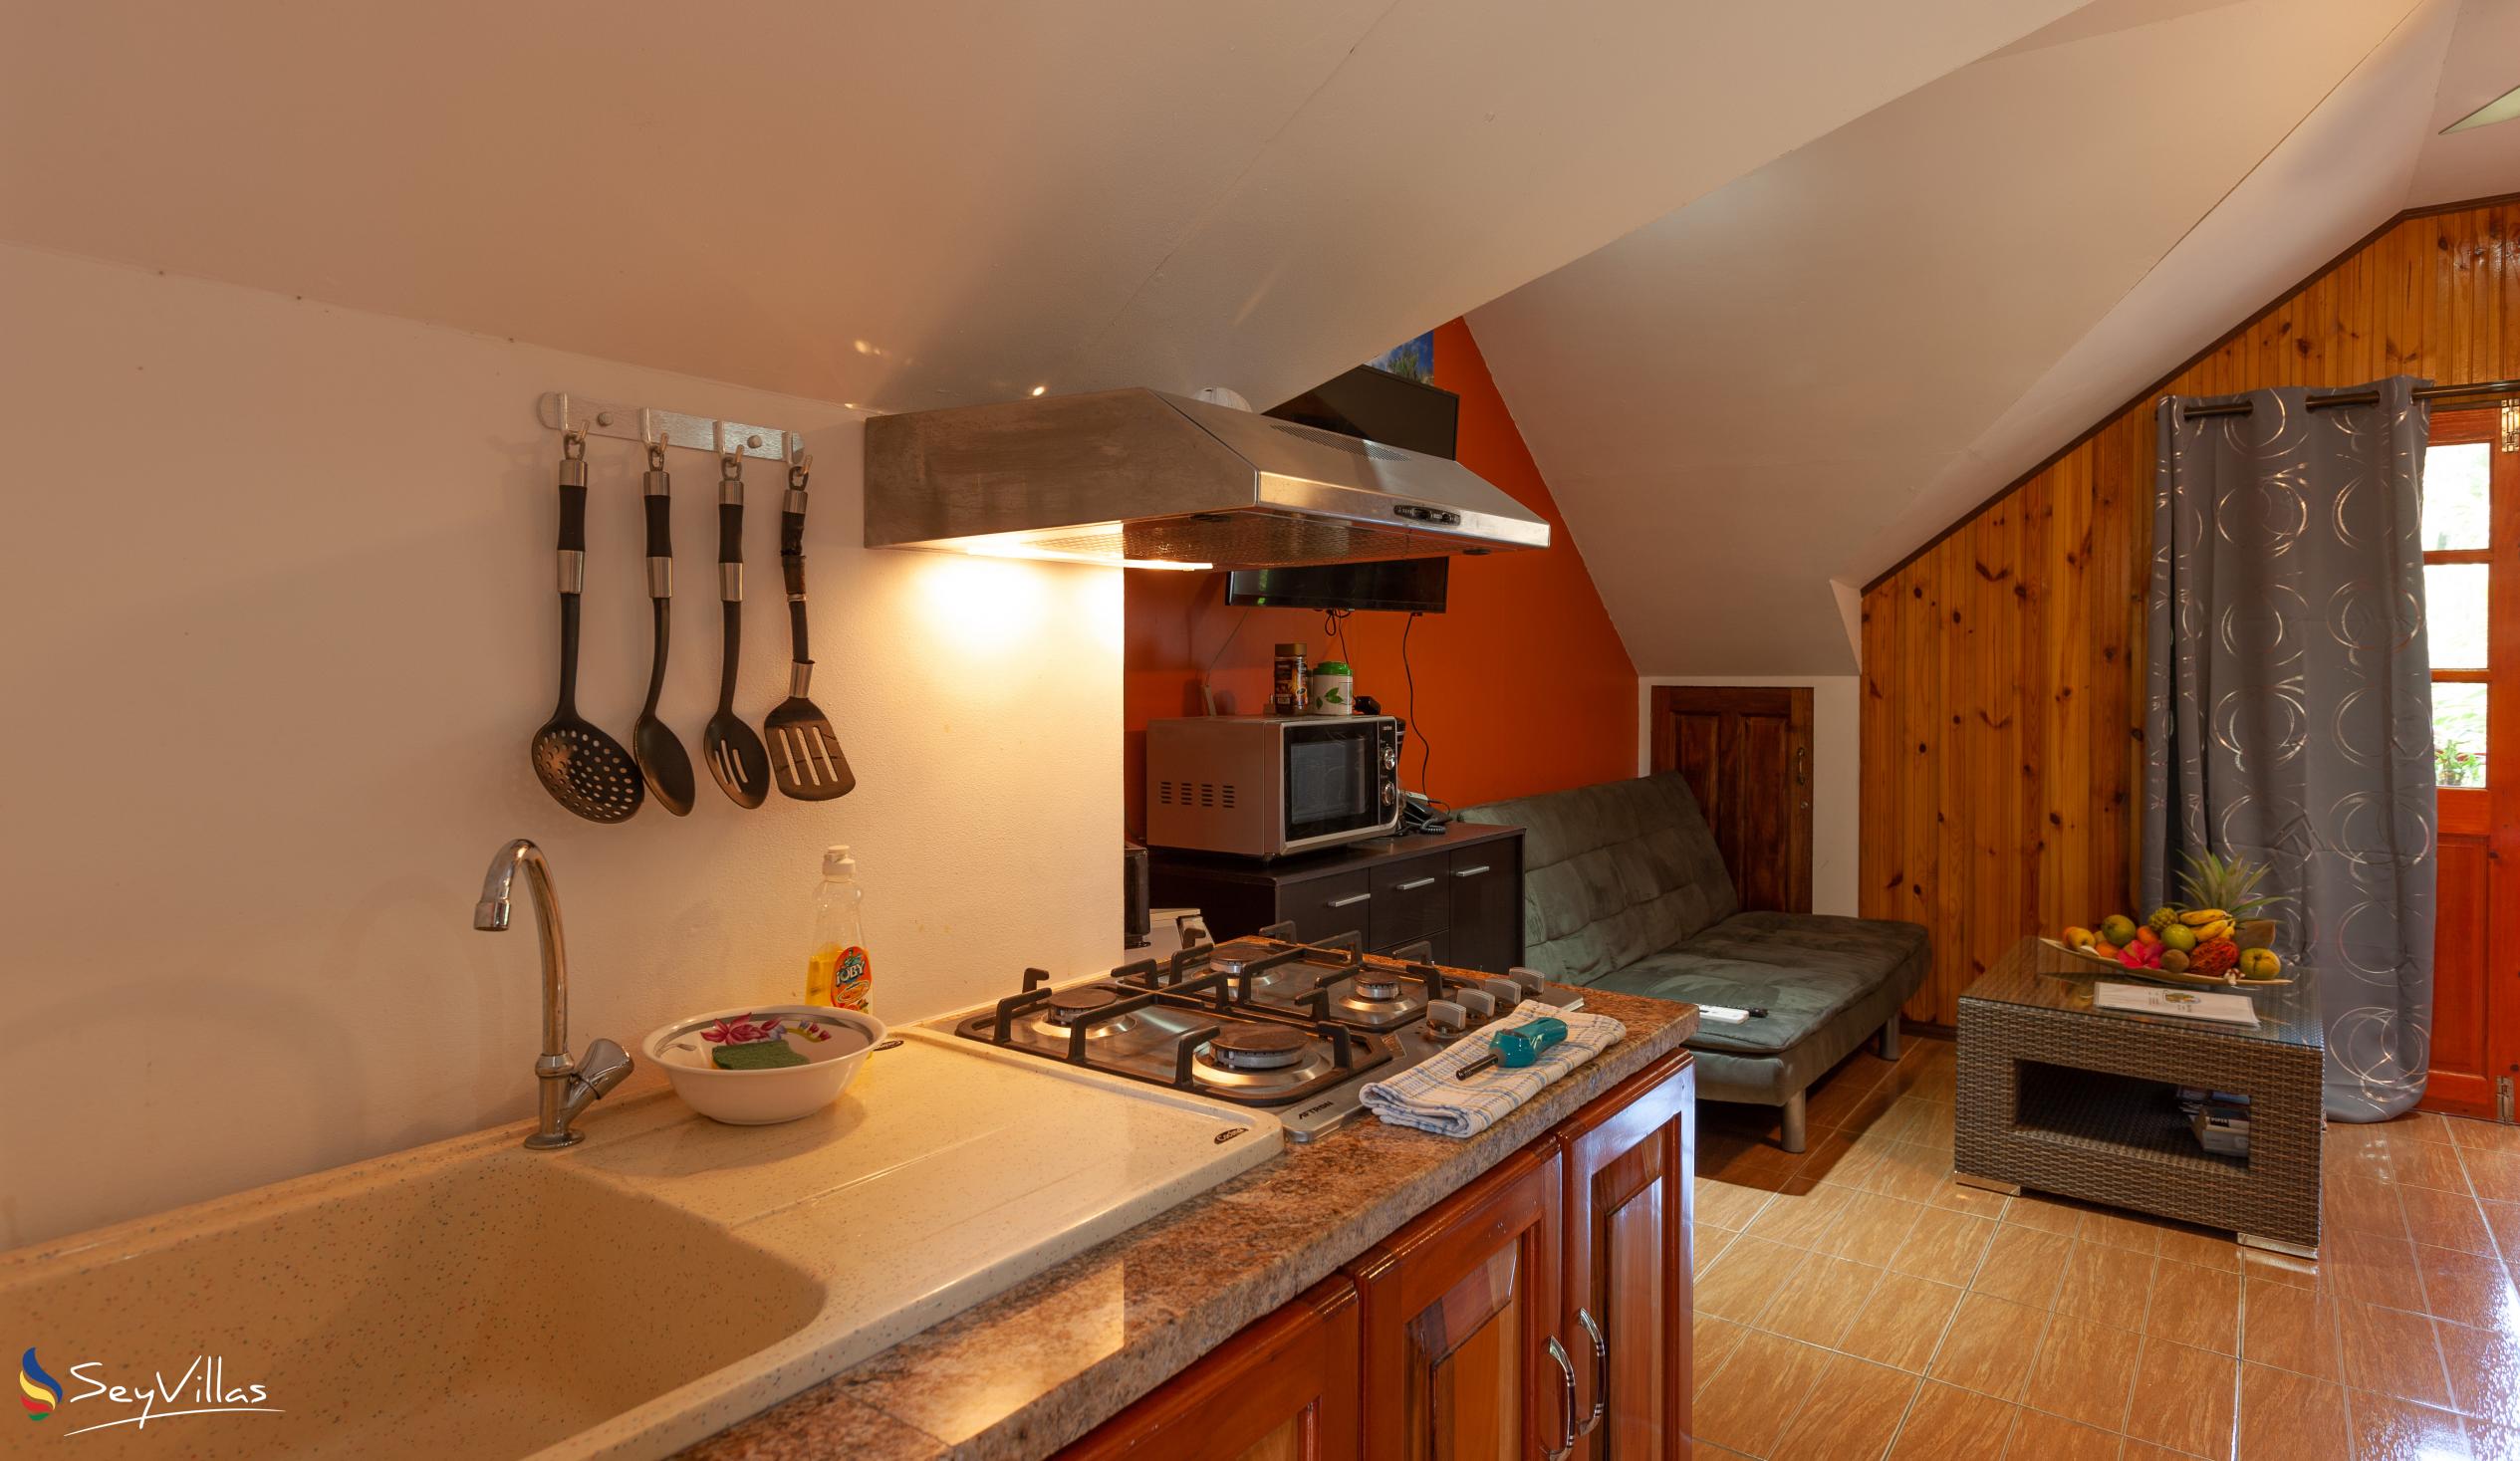 Photo 59: Chloe's Cottage - Garden Room with Kitchen - La Digue (Seychelles)